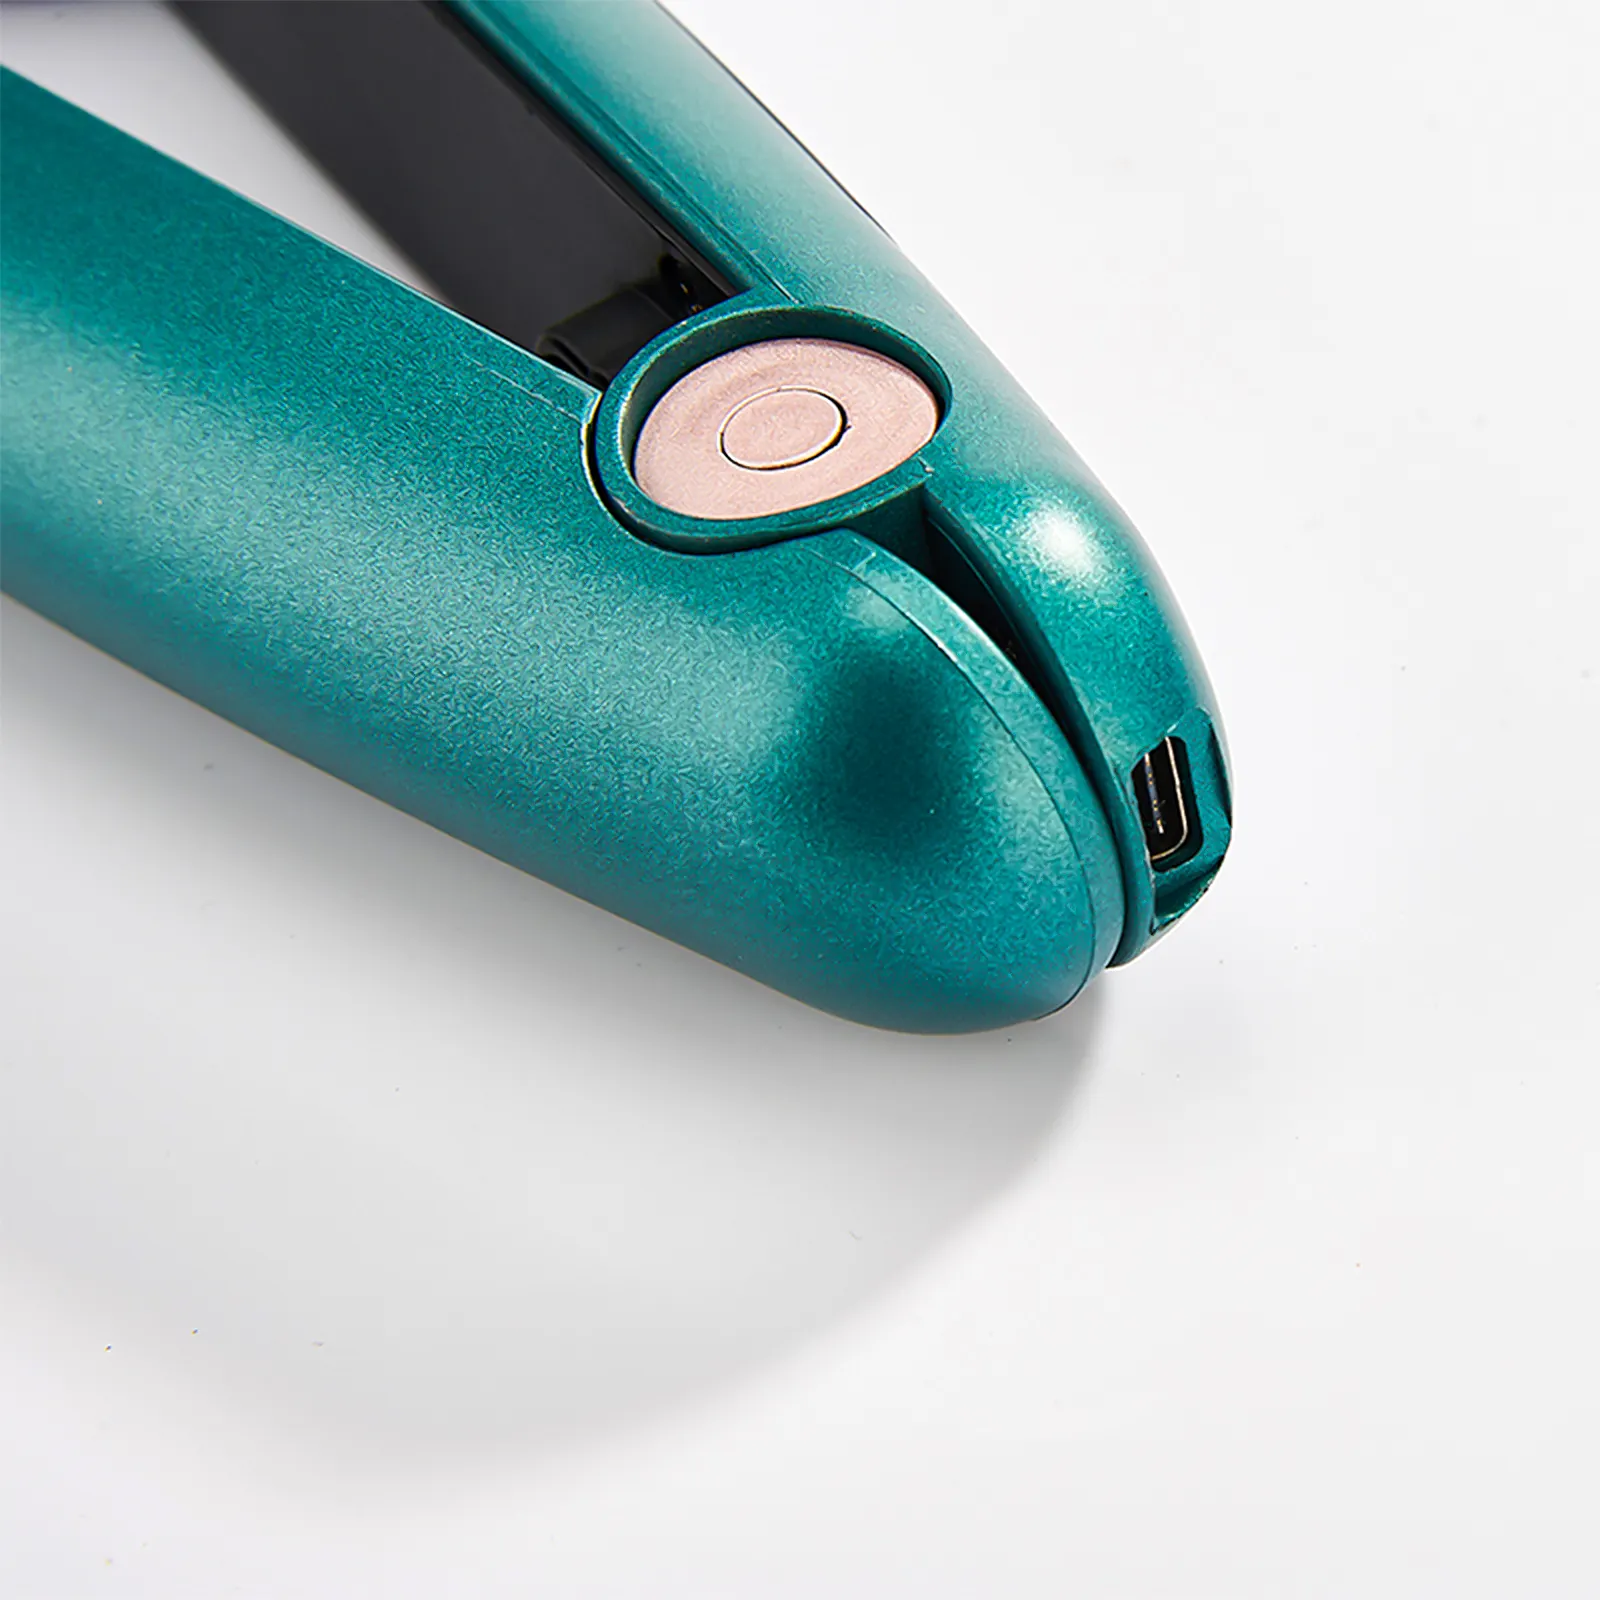 Vkk New Design Wireless Mist SteamPod Hair Straightener Steam Flat Irons